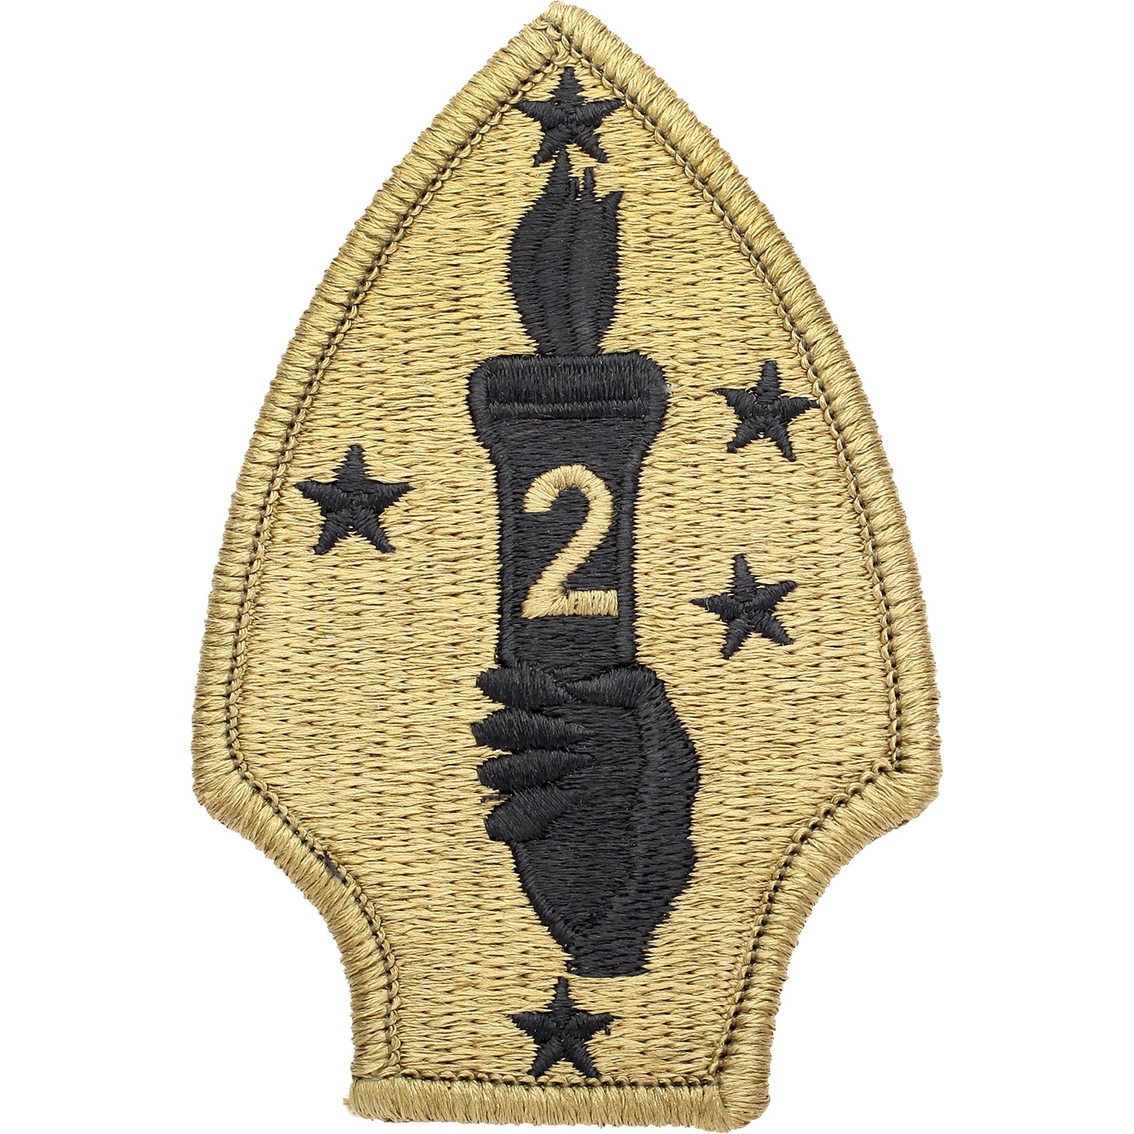 USMC Patch (subdued)